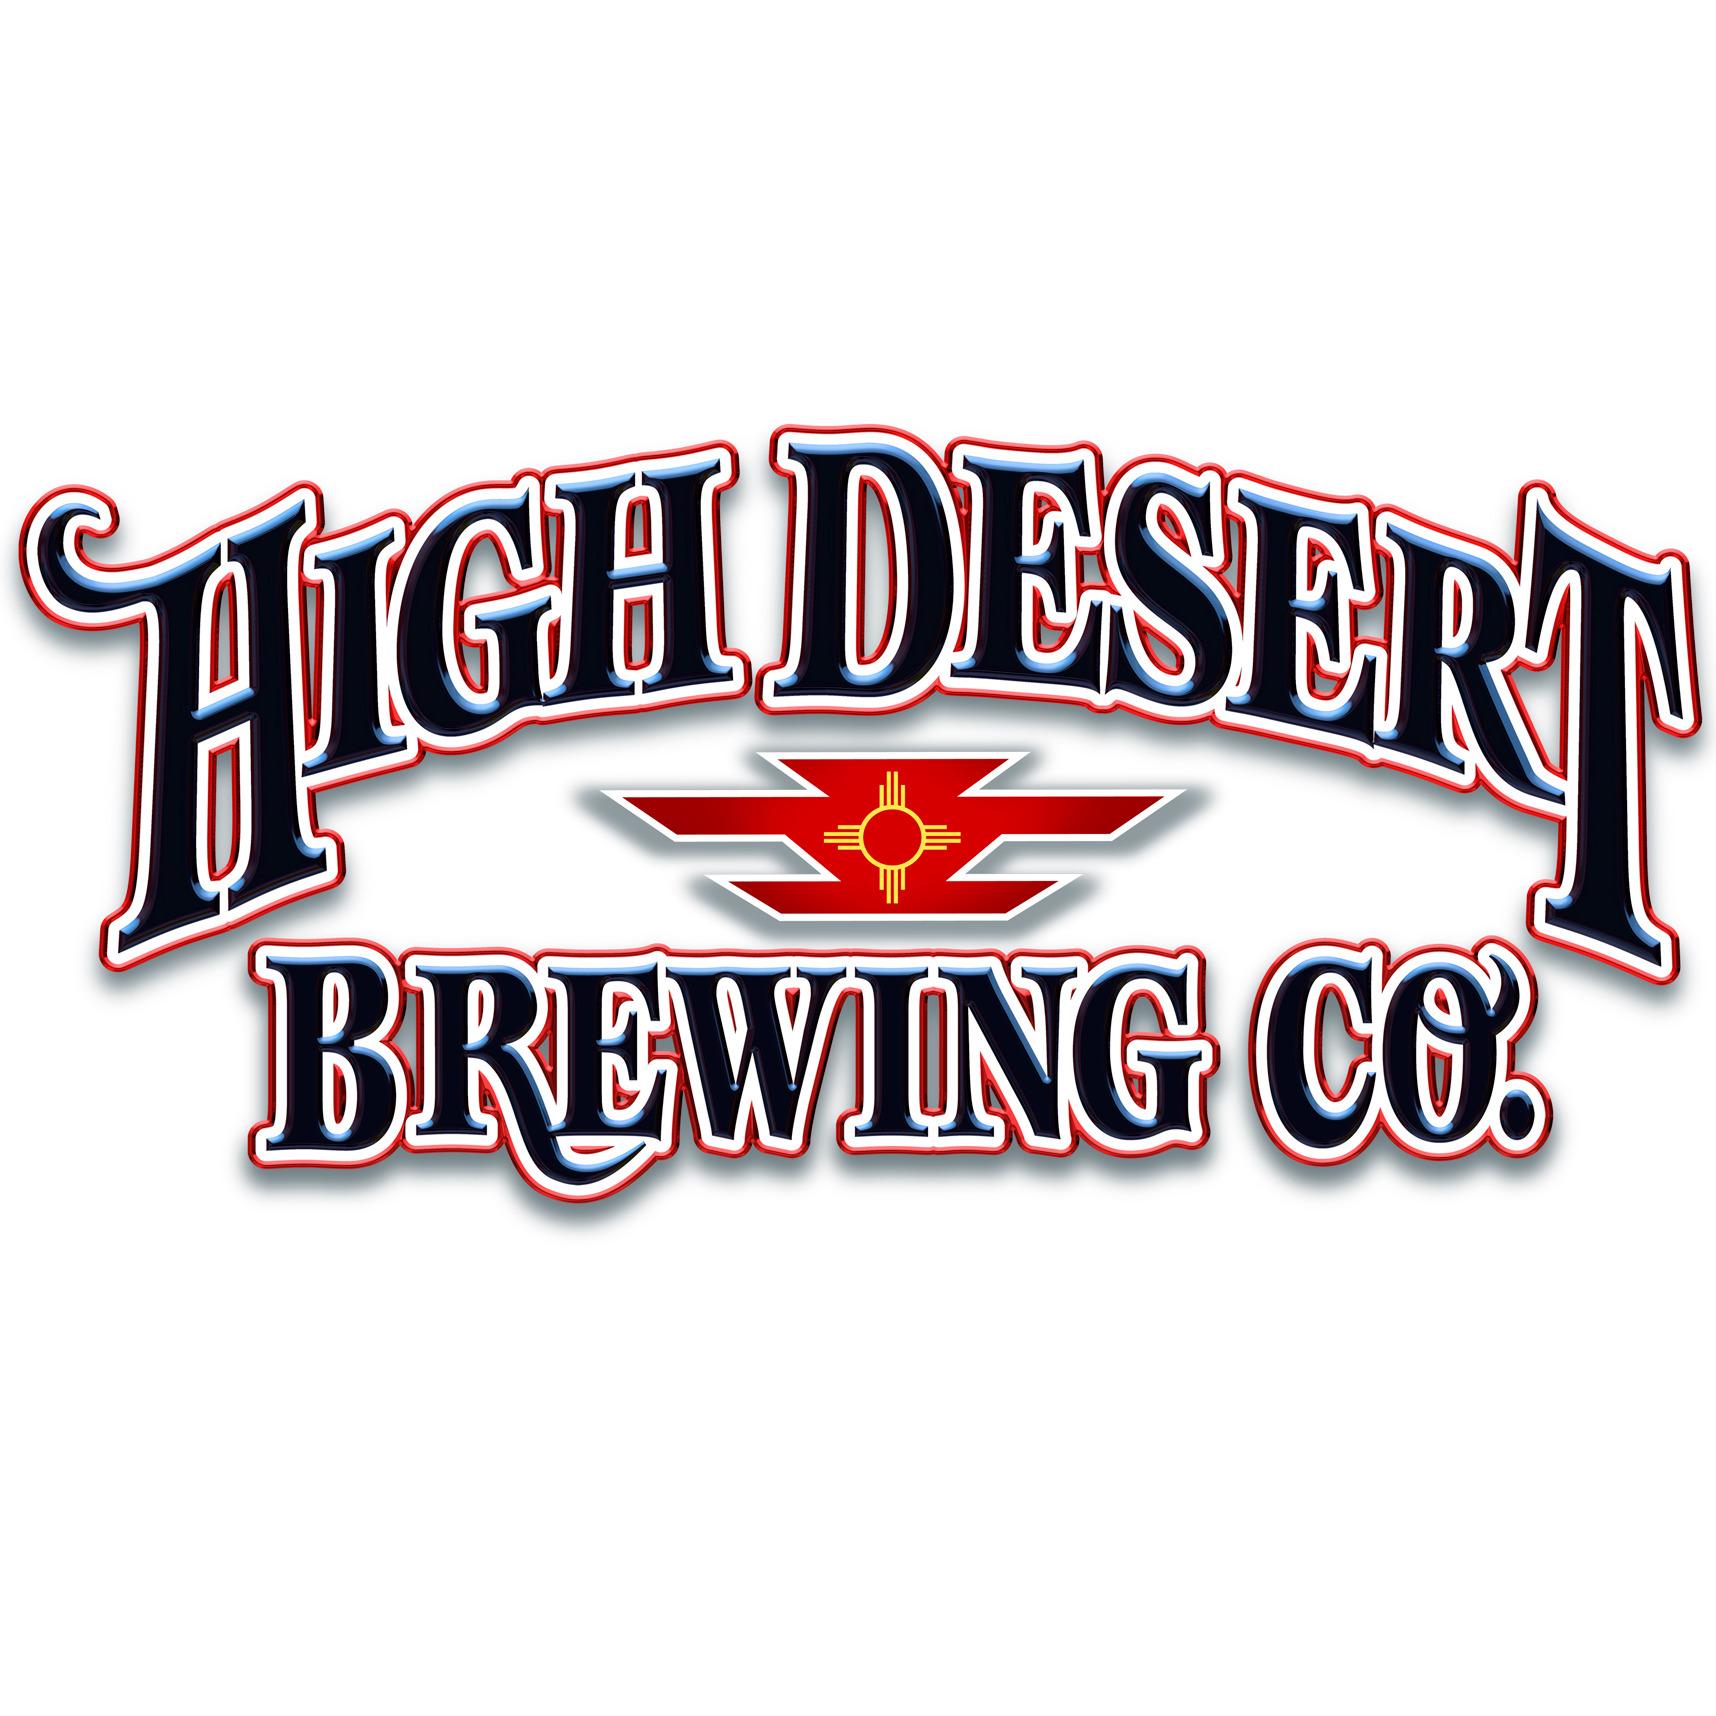 High Desert Brewing Co. - Las Cruces, NM 88005 - (575)525-6752 | ShowMeLocal.com